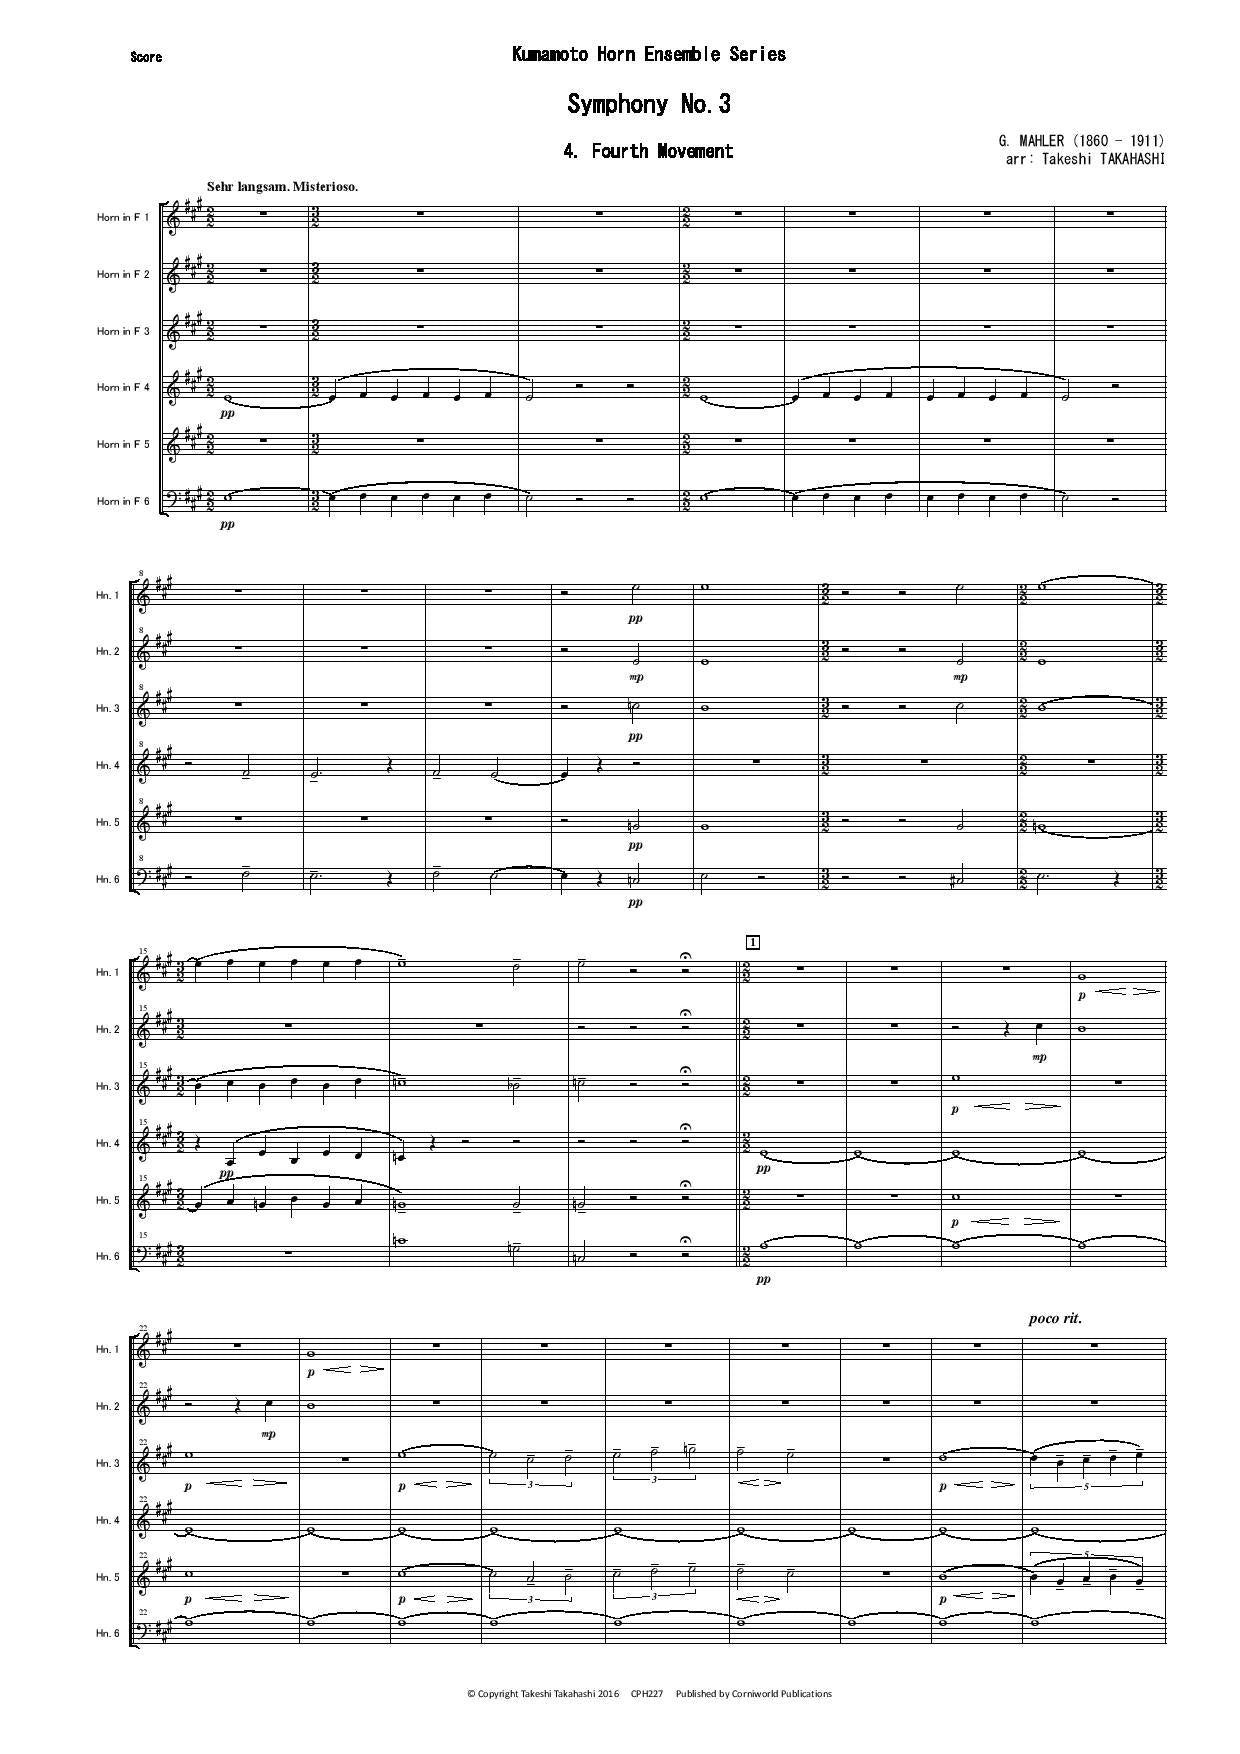 4th Mvt from Symphony No.3 (Mahler) CPH227